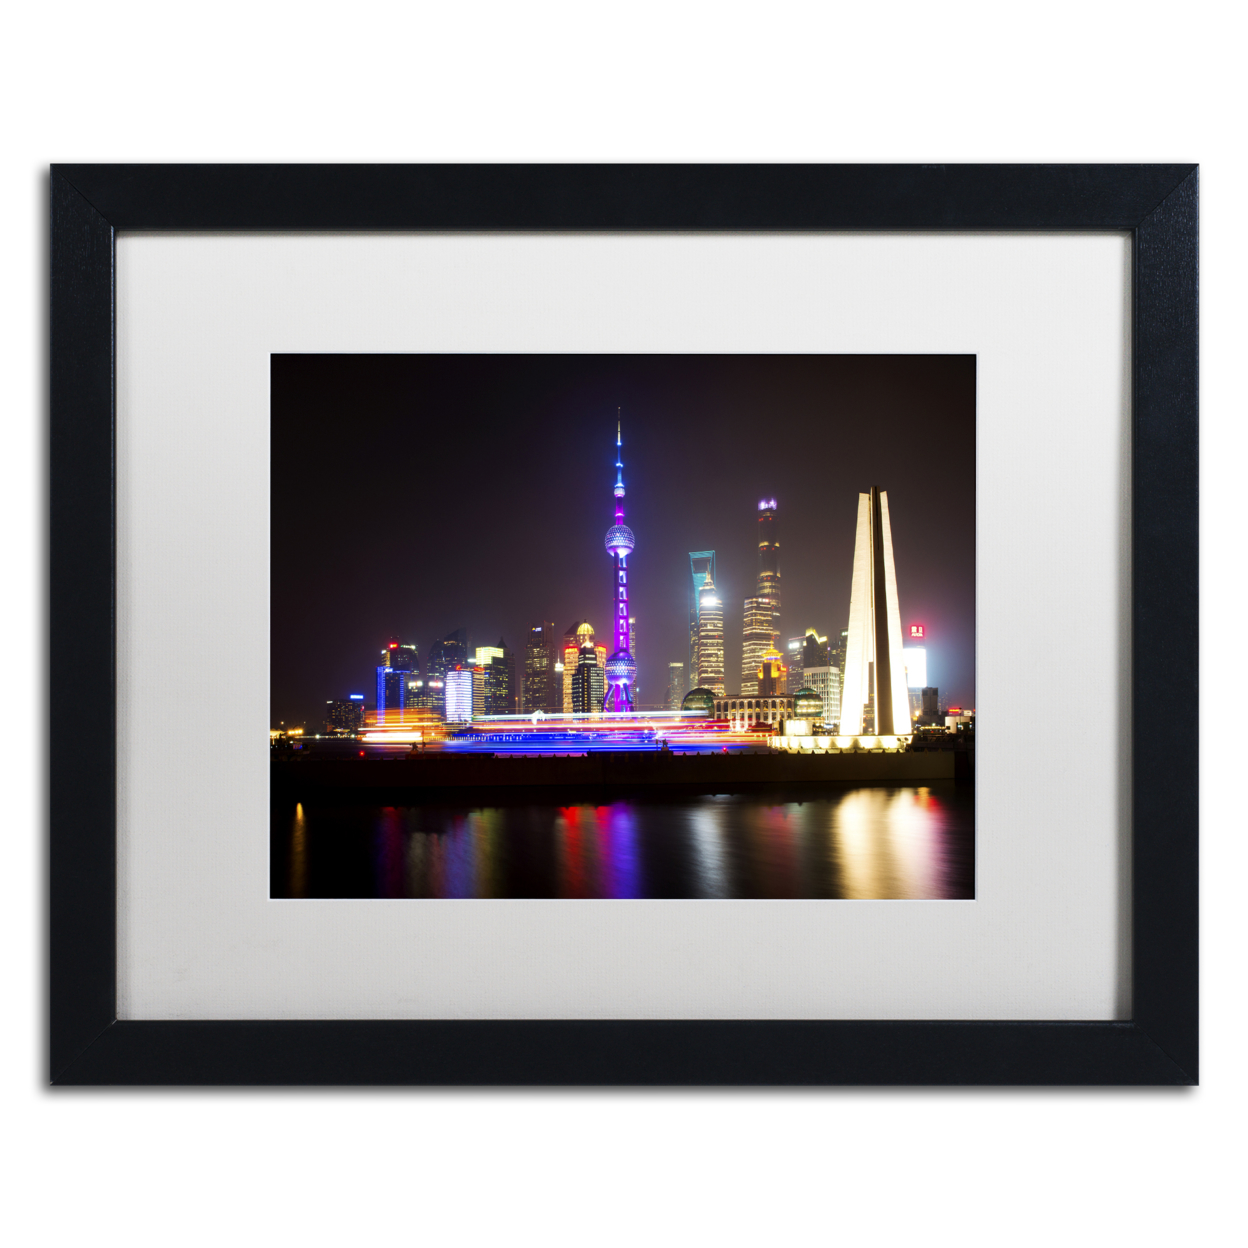 Philippe Hugonnard 'Shanghai City' Black Wooden Framed Art 18 X 22 Inches